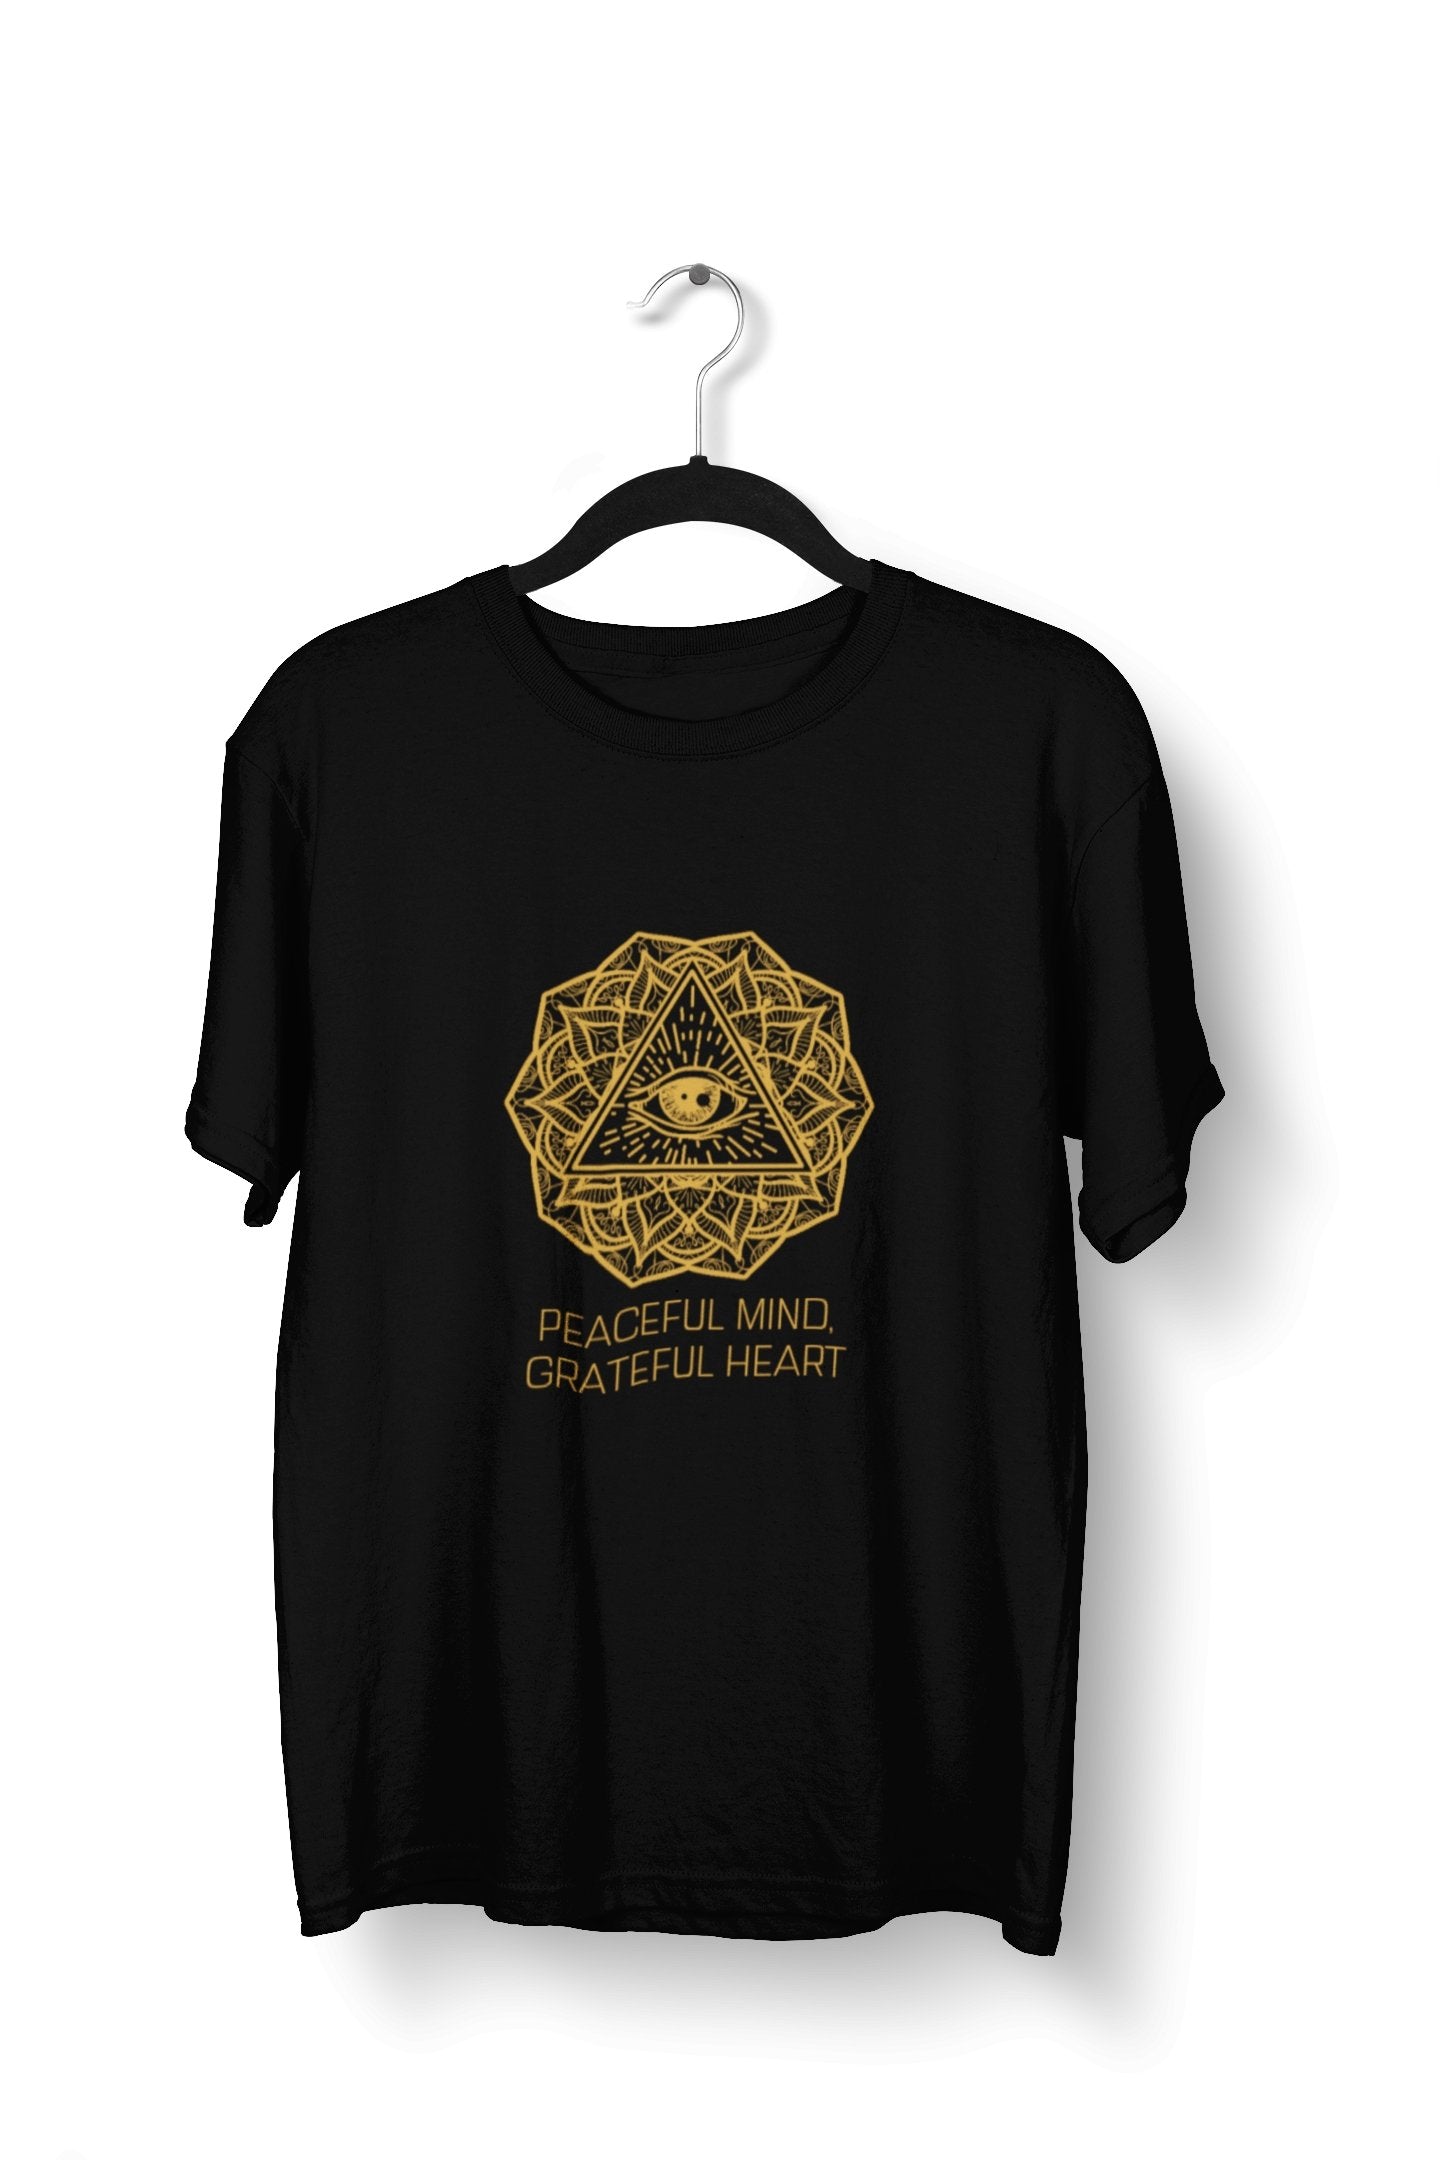 thelegalgang,Third Eye Peaceful Mind Yoga T-Shirt for Men,.